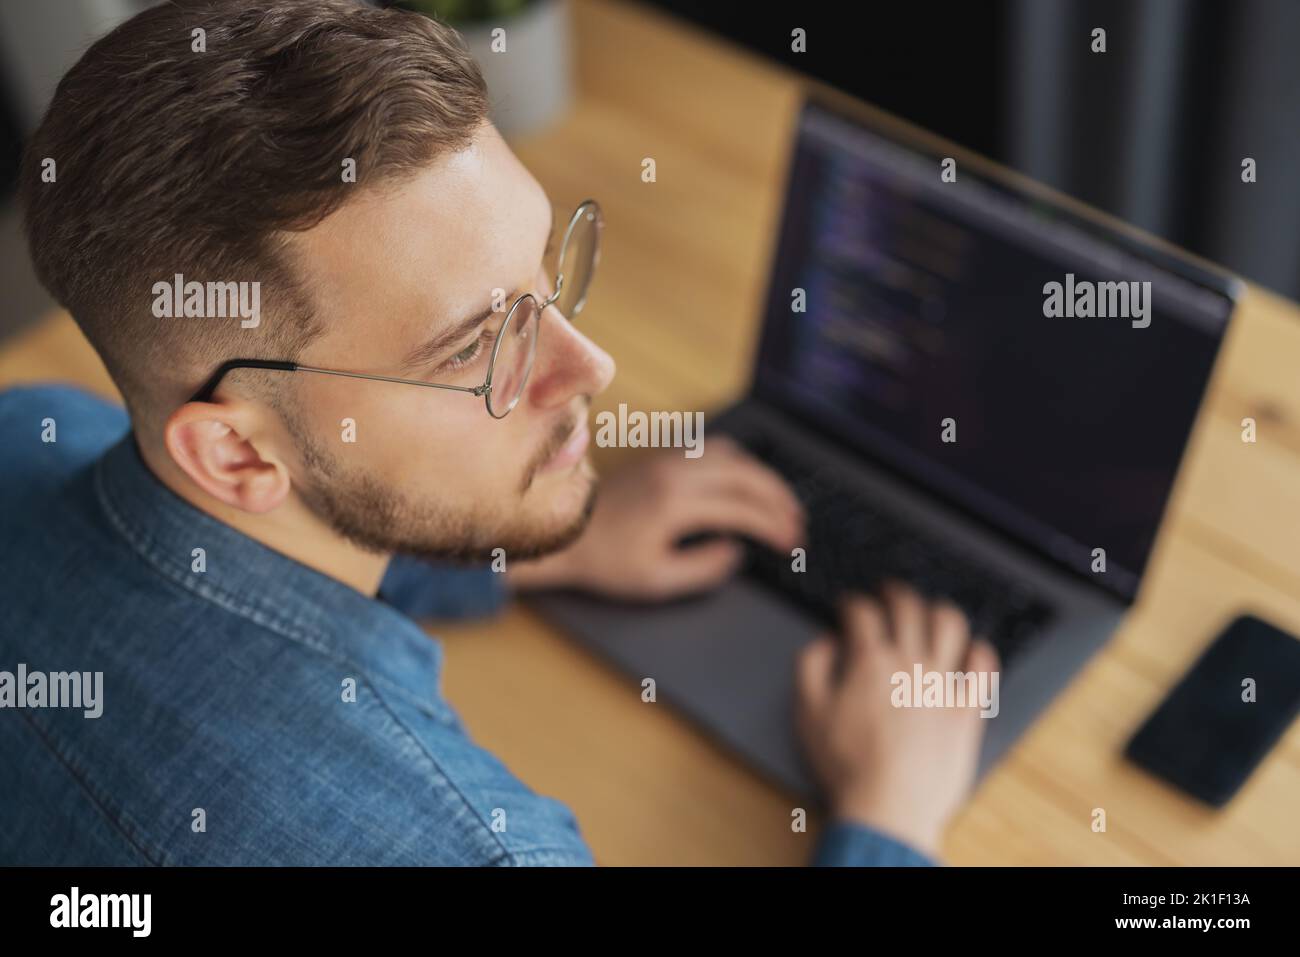 Man writing code on laptop Stock Photo